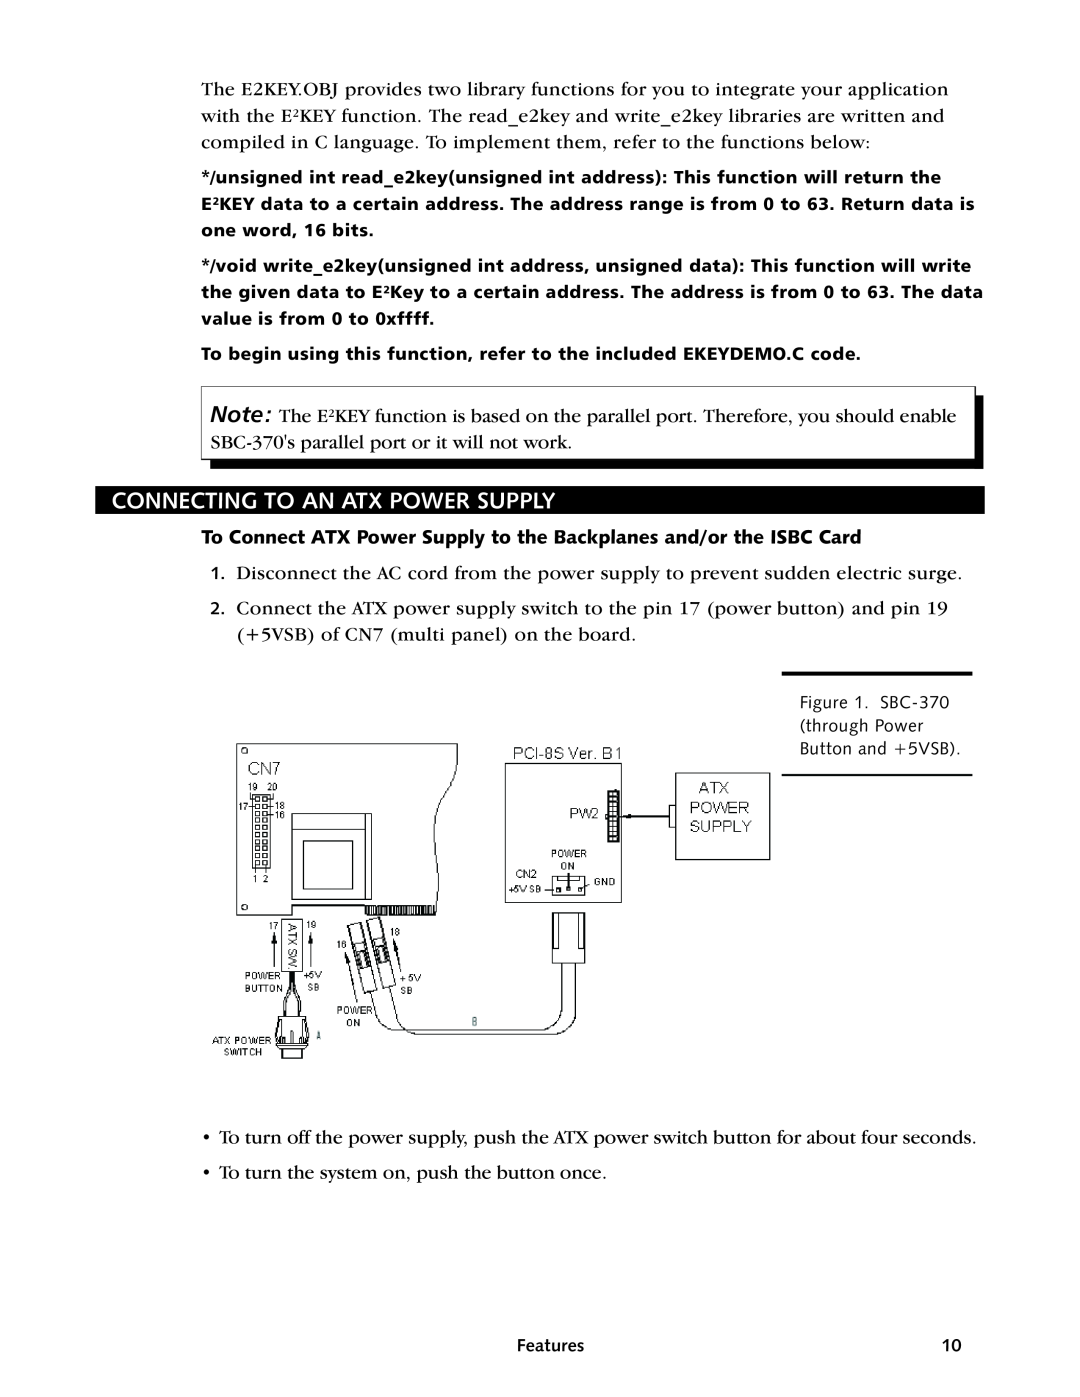 Intel SBC-370 manual Connecting To An Atx Power Supply 